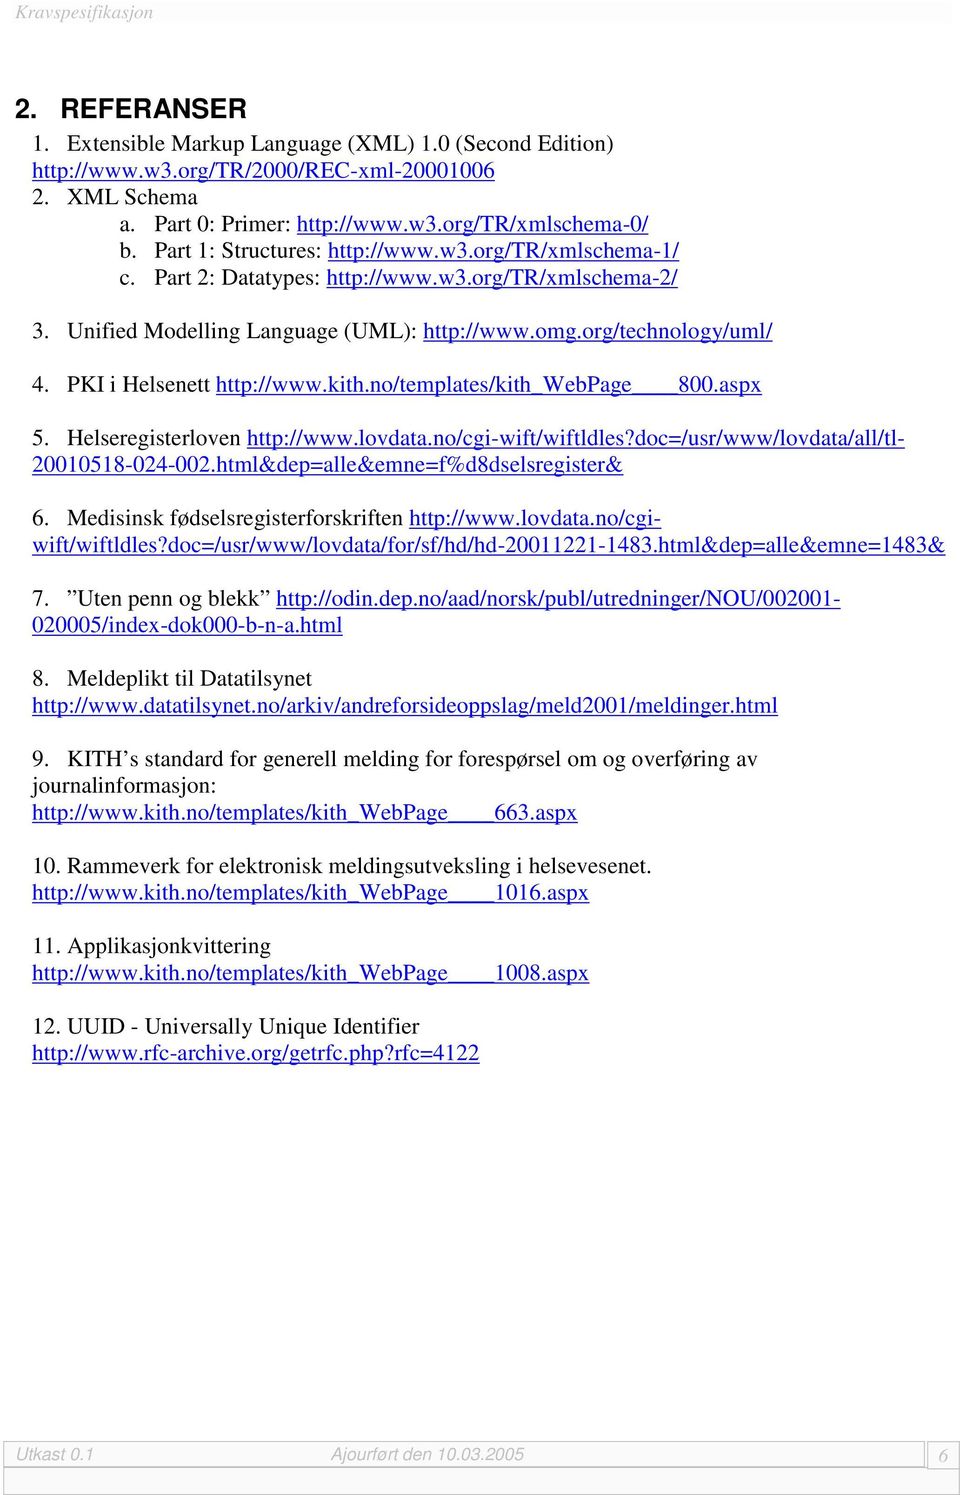 PKI i Helsenett http://www.kith.no/templates/kith_webpage 800.aspx 5. Helseregisterloven http://www.lovdata.no/cgi-wift/wiftldles?doc=/usr/www/lovdata/all/tl- 200058-024-002.